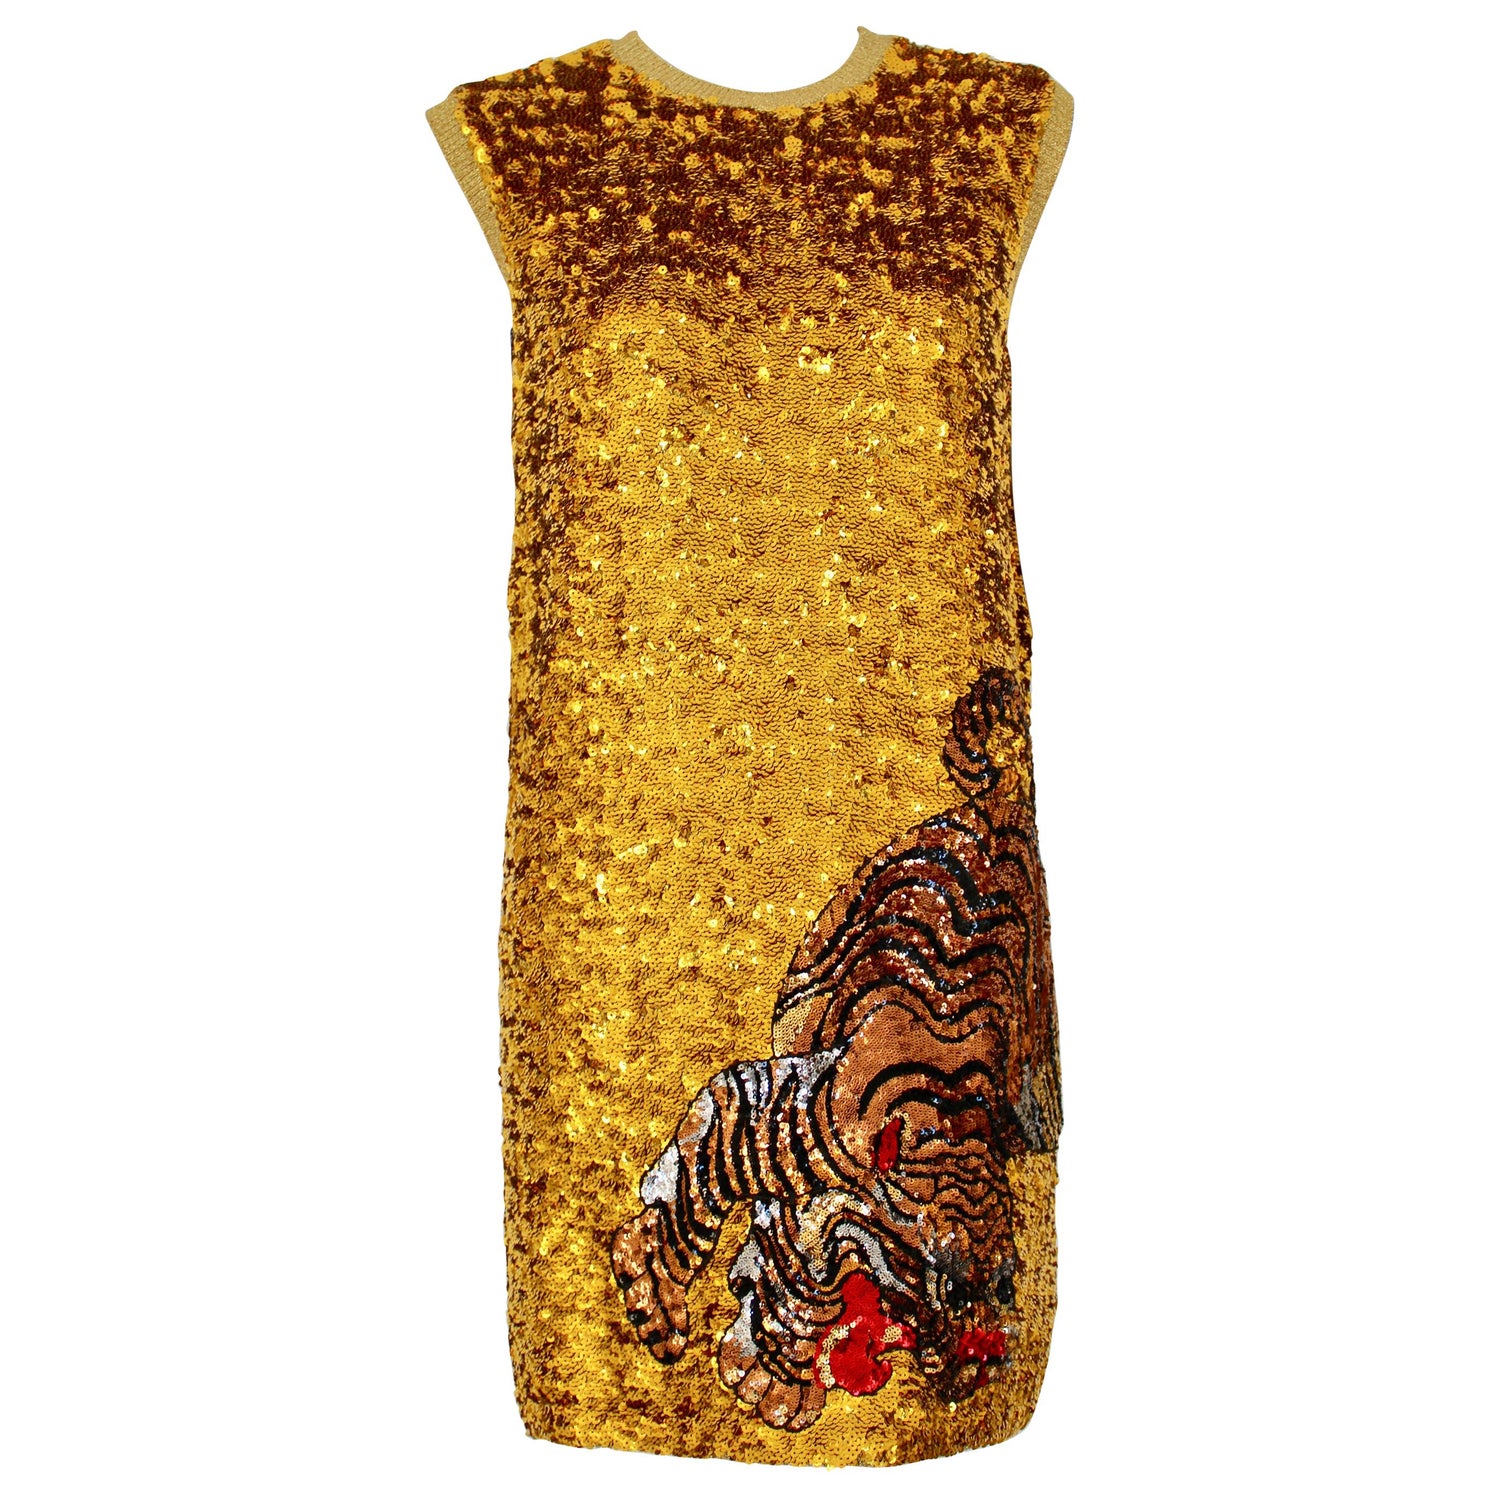 Gucci Tiger Dress - 5 For Sale on 1stDibs